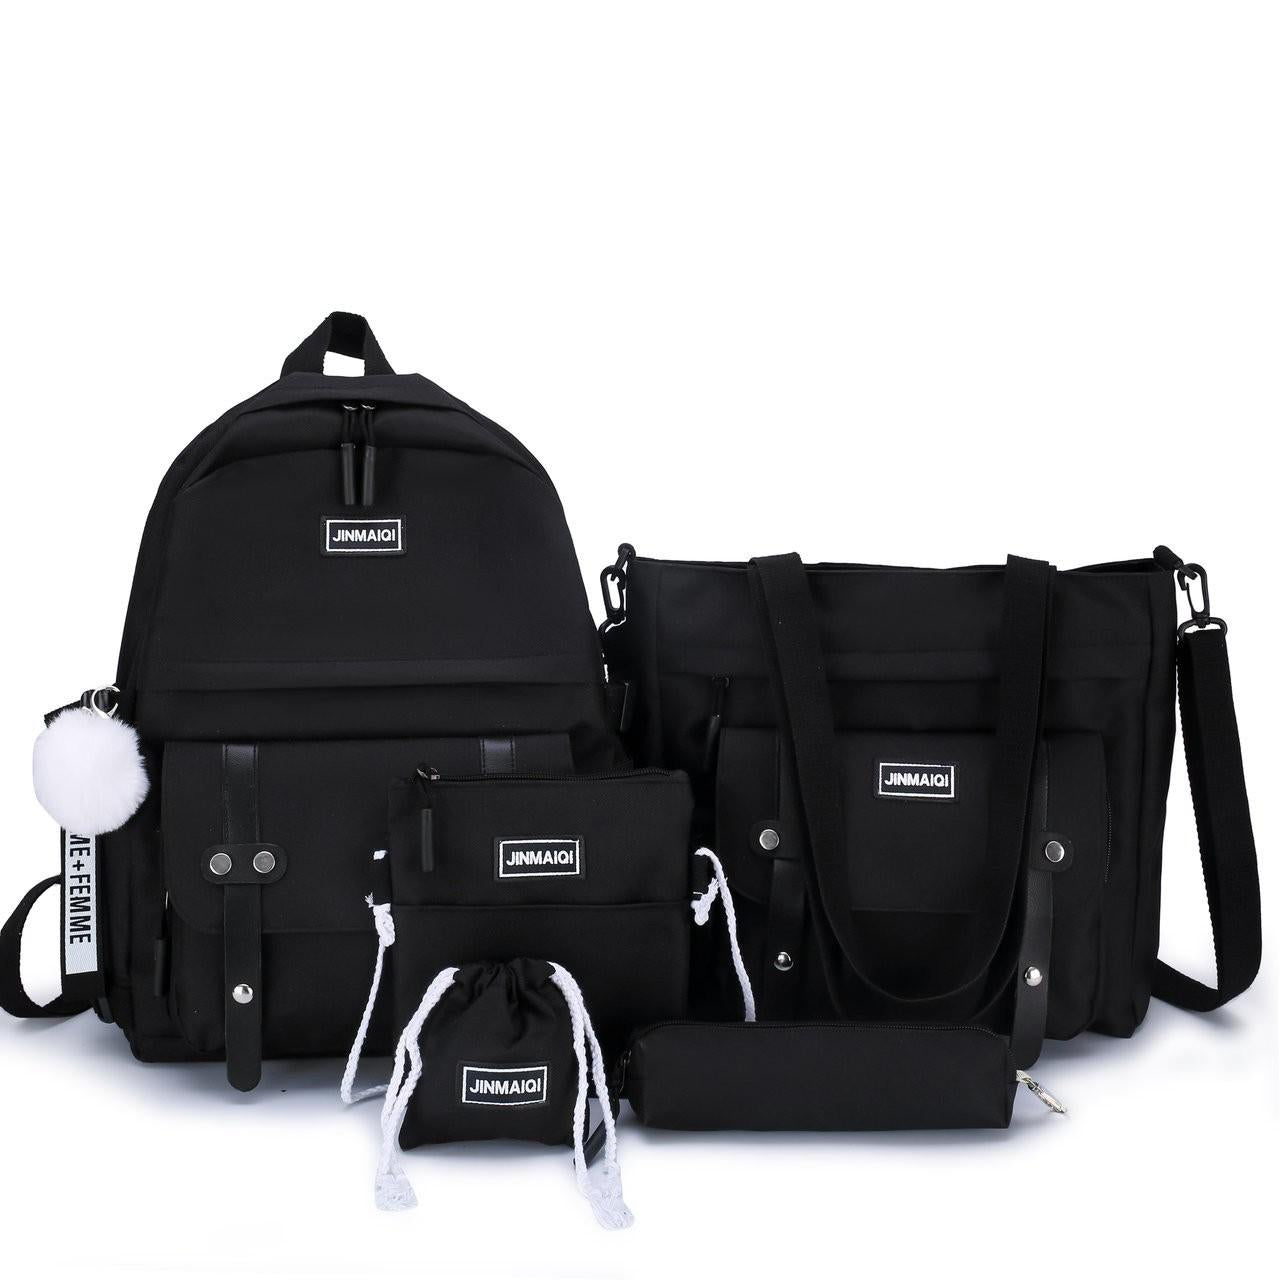 Cyflymder 5 pcs sets canvas Schoolbags For Teenage Girls Women Backpacks Laptop keychain School Bags Travel Bagpack Mochila Escolar Shoulder Bag Women